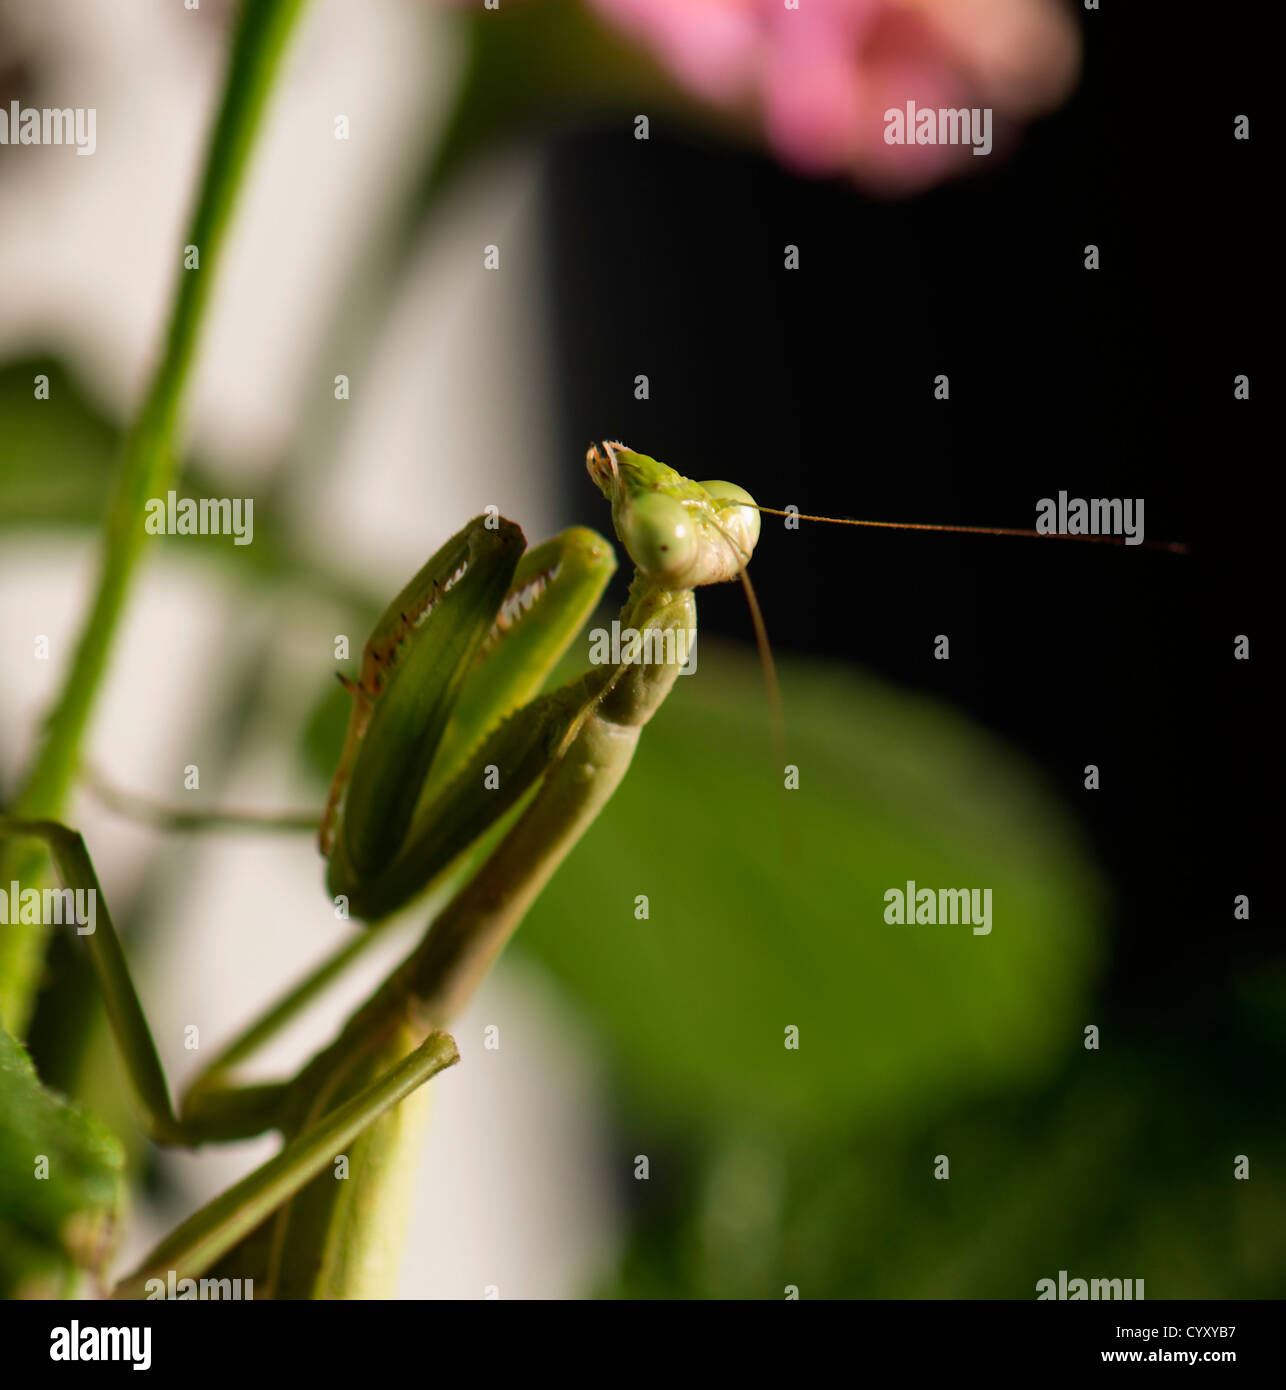 A female Praying Mantis, Mantis religiosa on a plant stem. Oklahoma, USA. Stock Photo